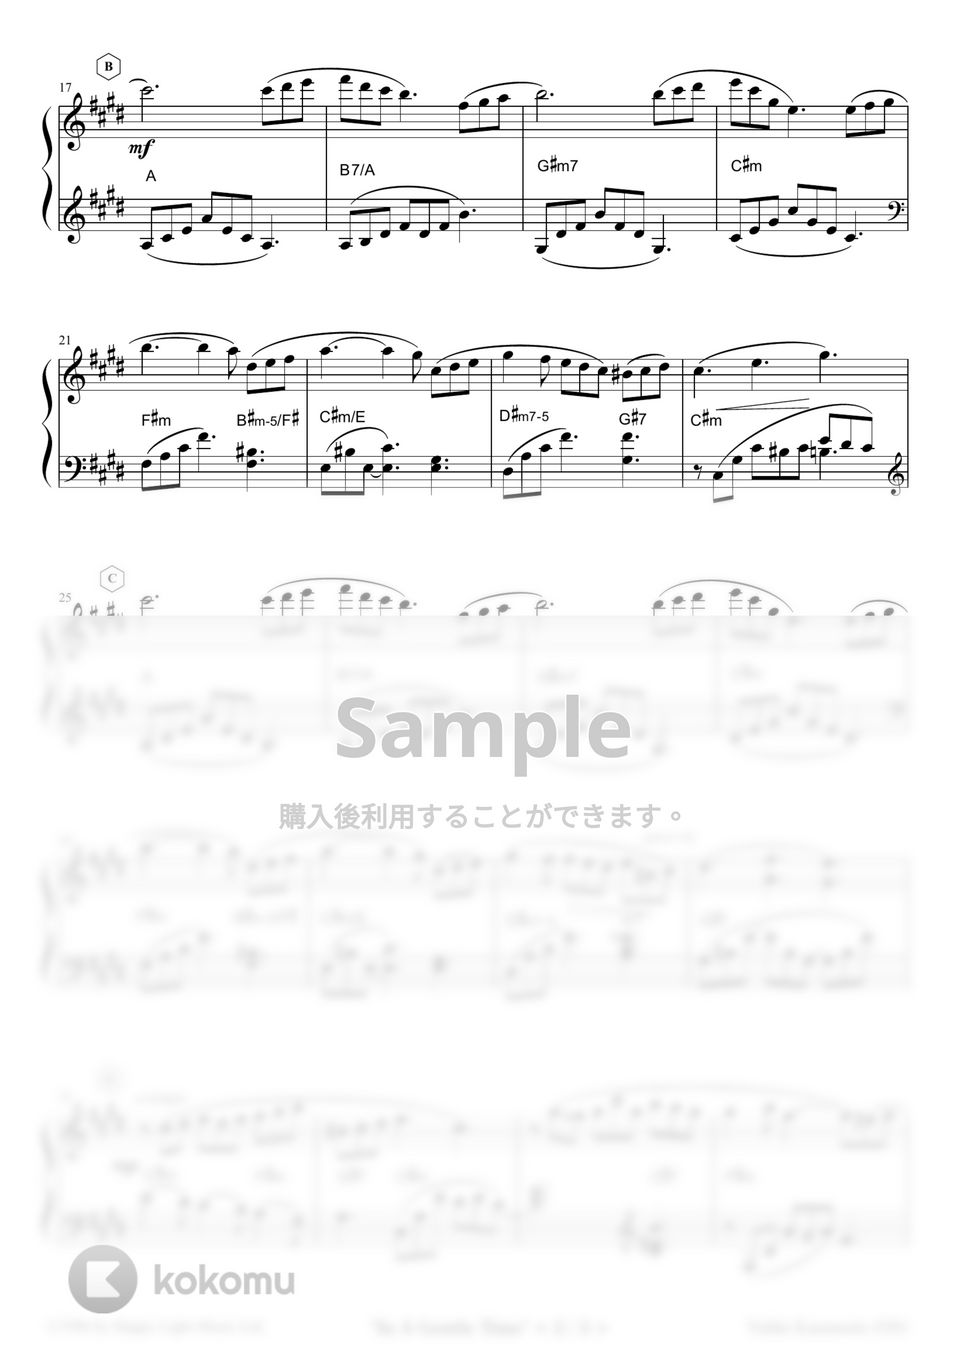 Yuhki Kuramoto - In A Gentle Time (Easy Ver.) by Yuhki Kuramoto